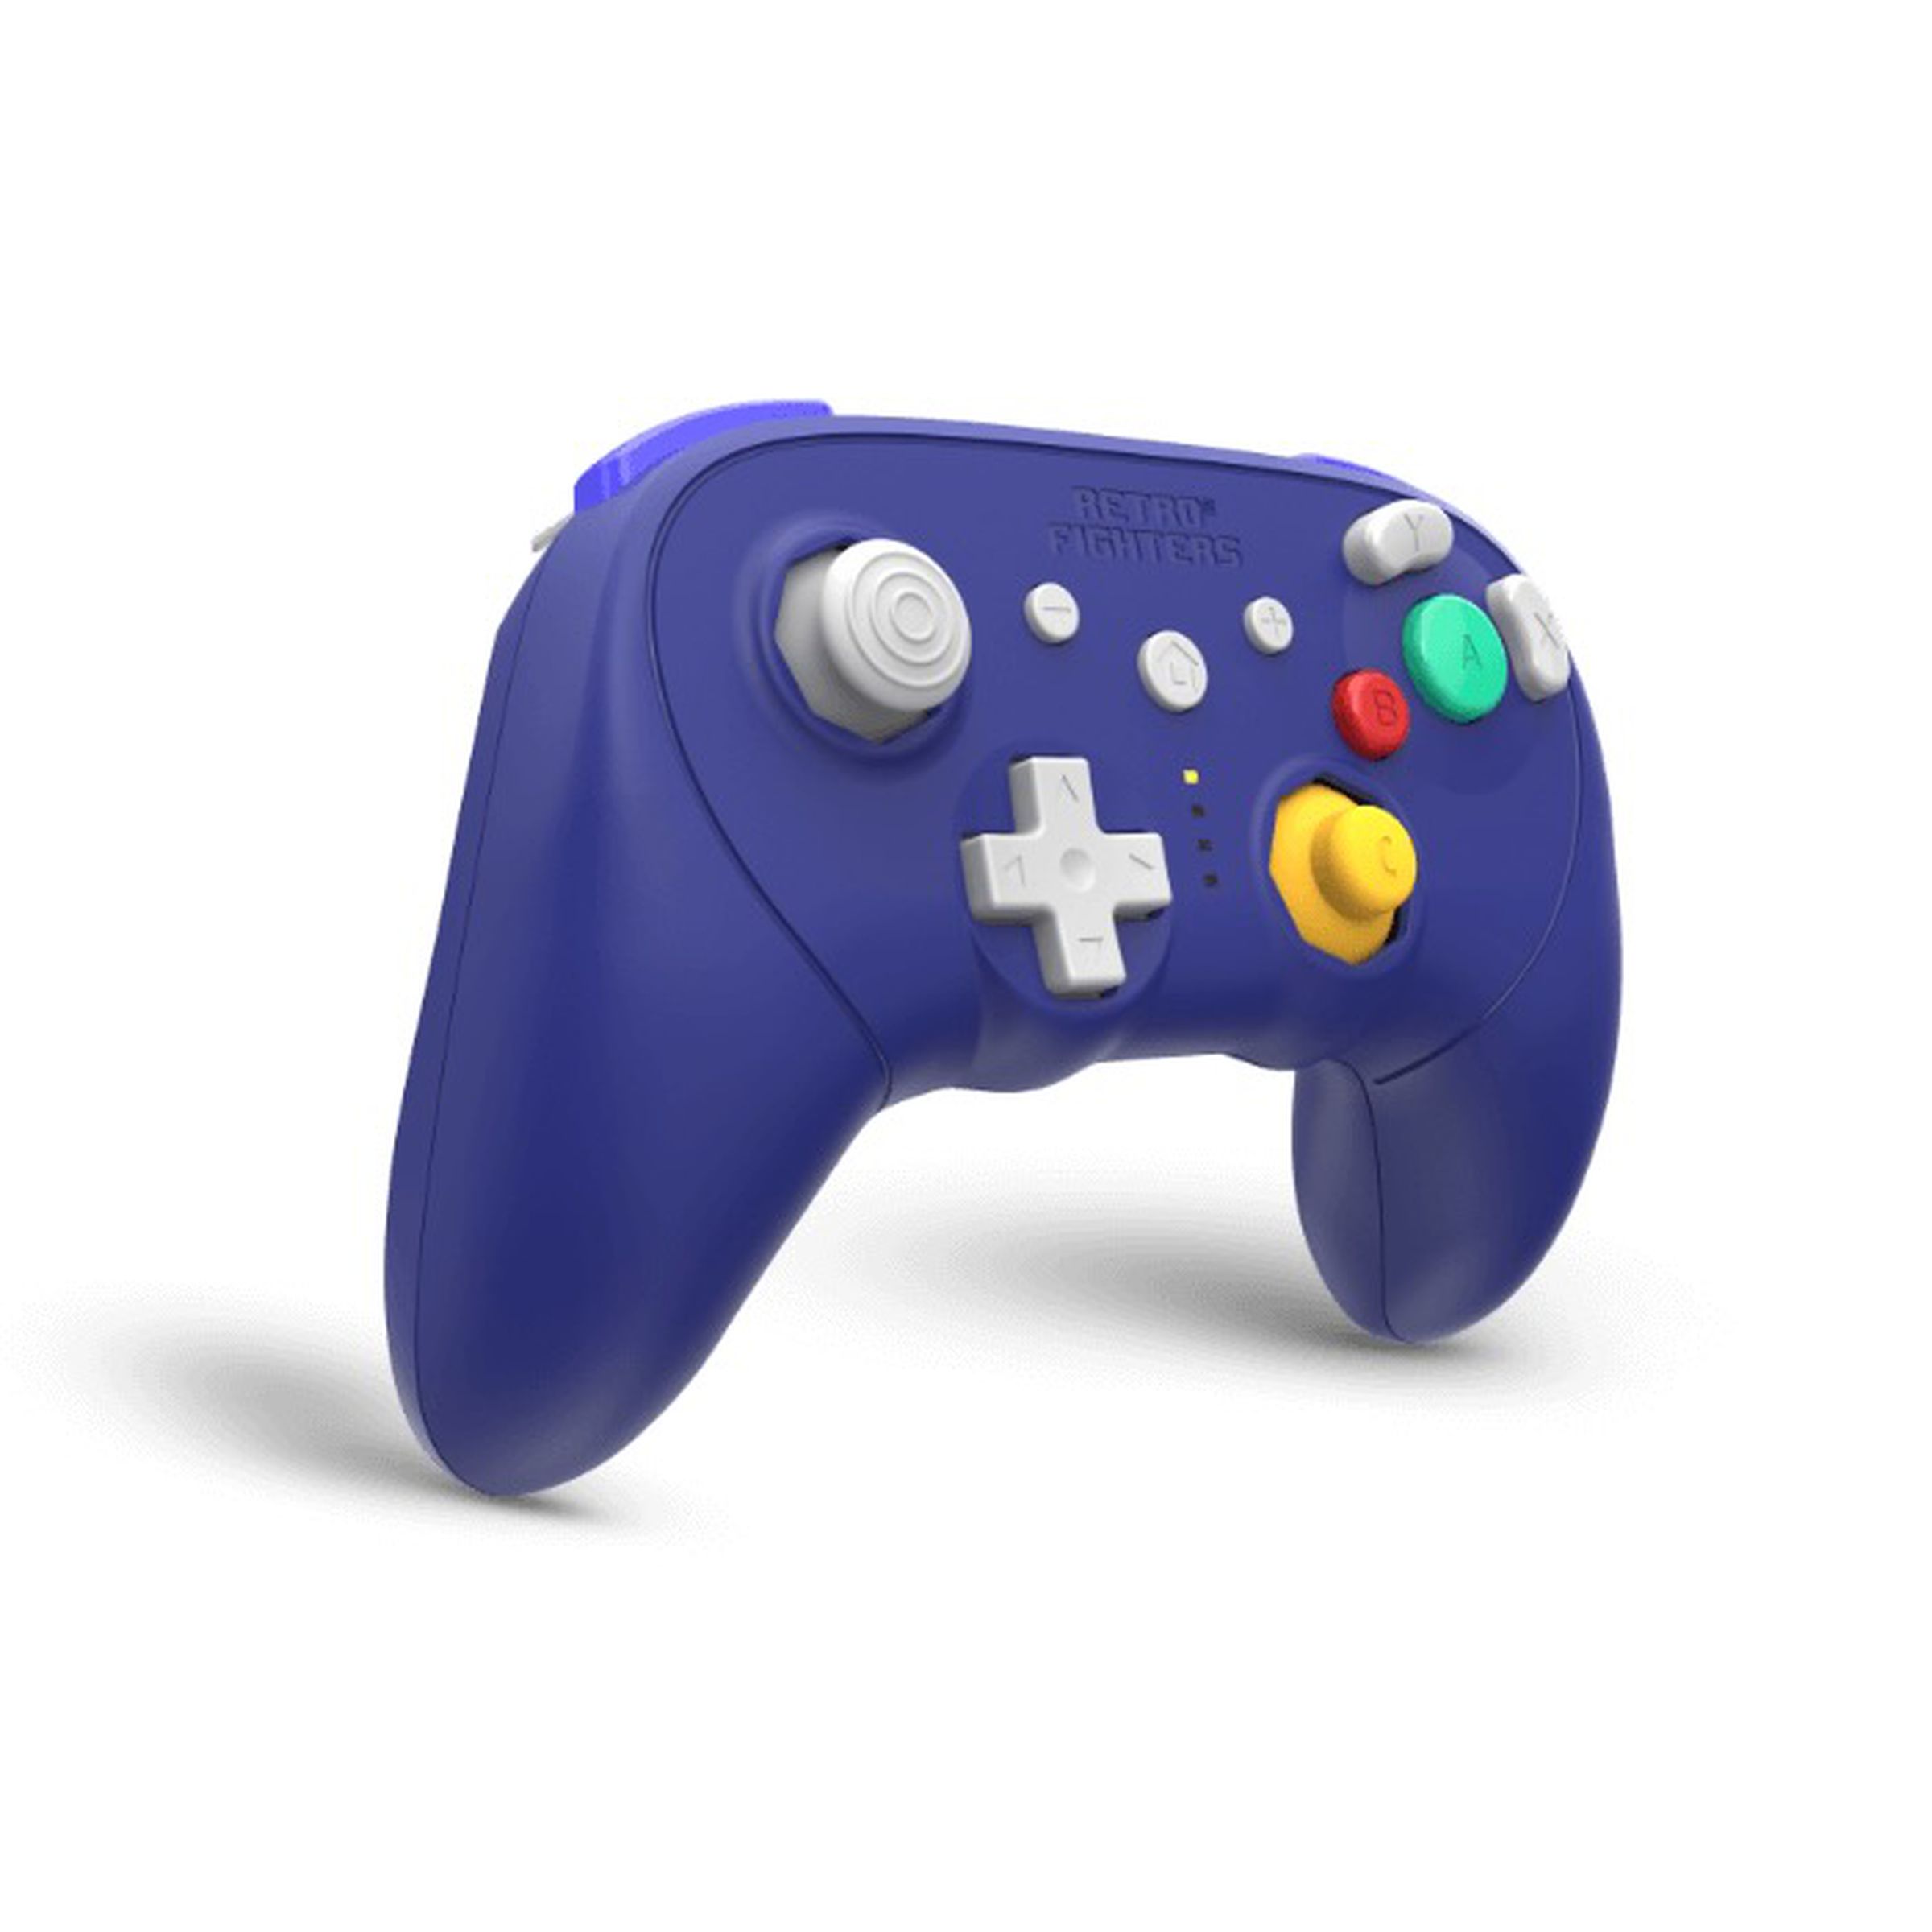 Purple GameCube-style controller.